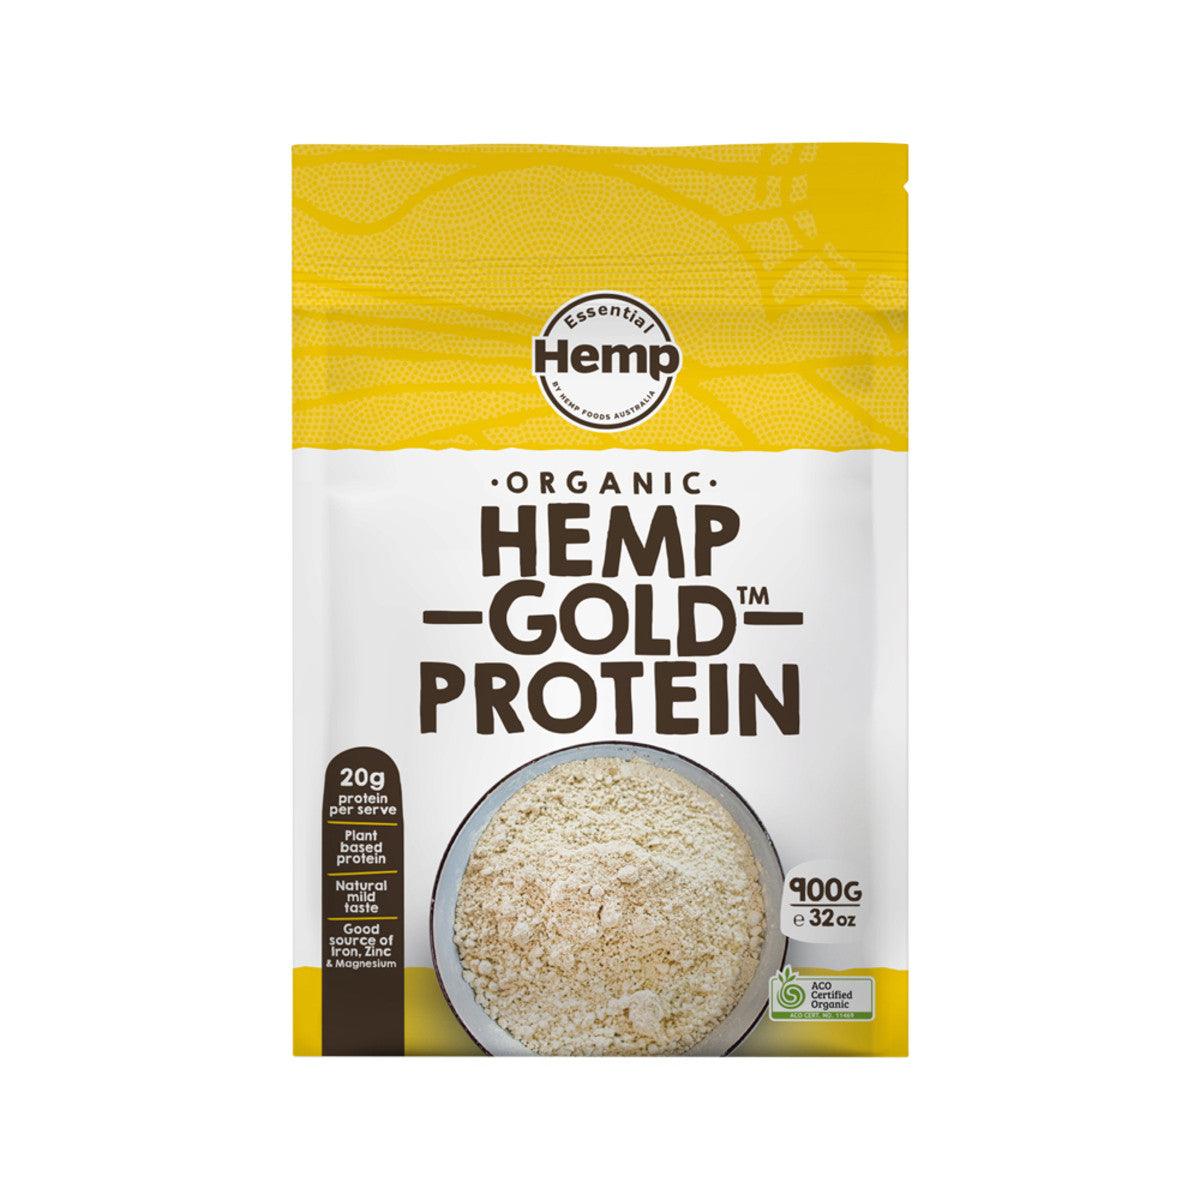 Essential Hemp Organic Hemp Protein Powder 900g - QVM Vitamins™